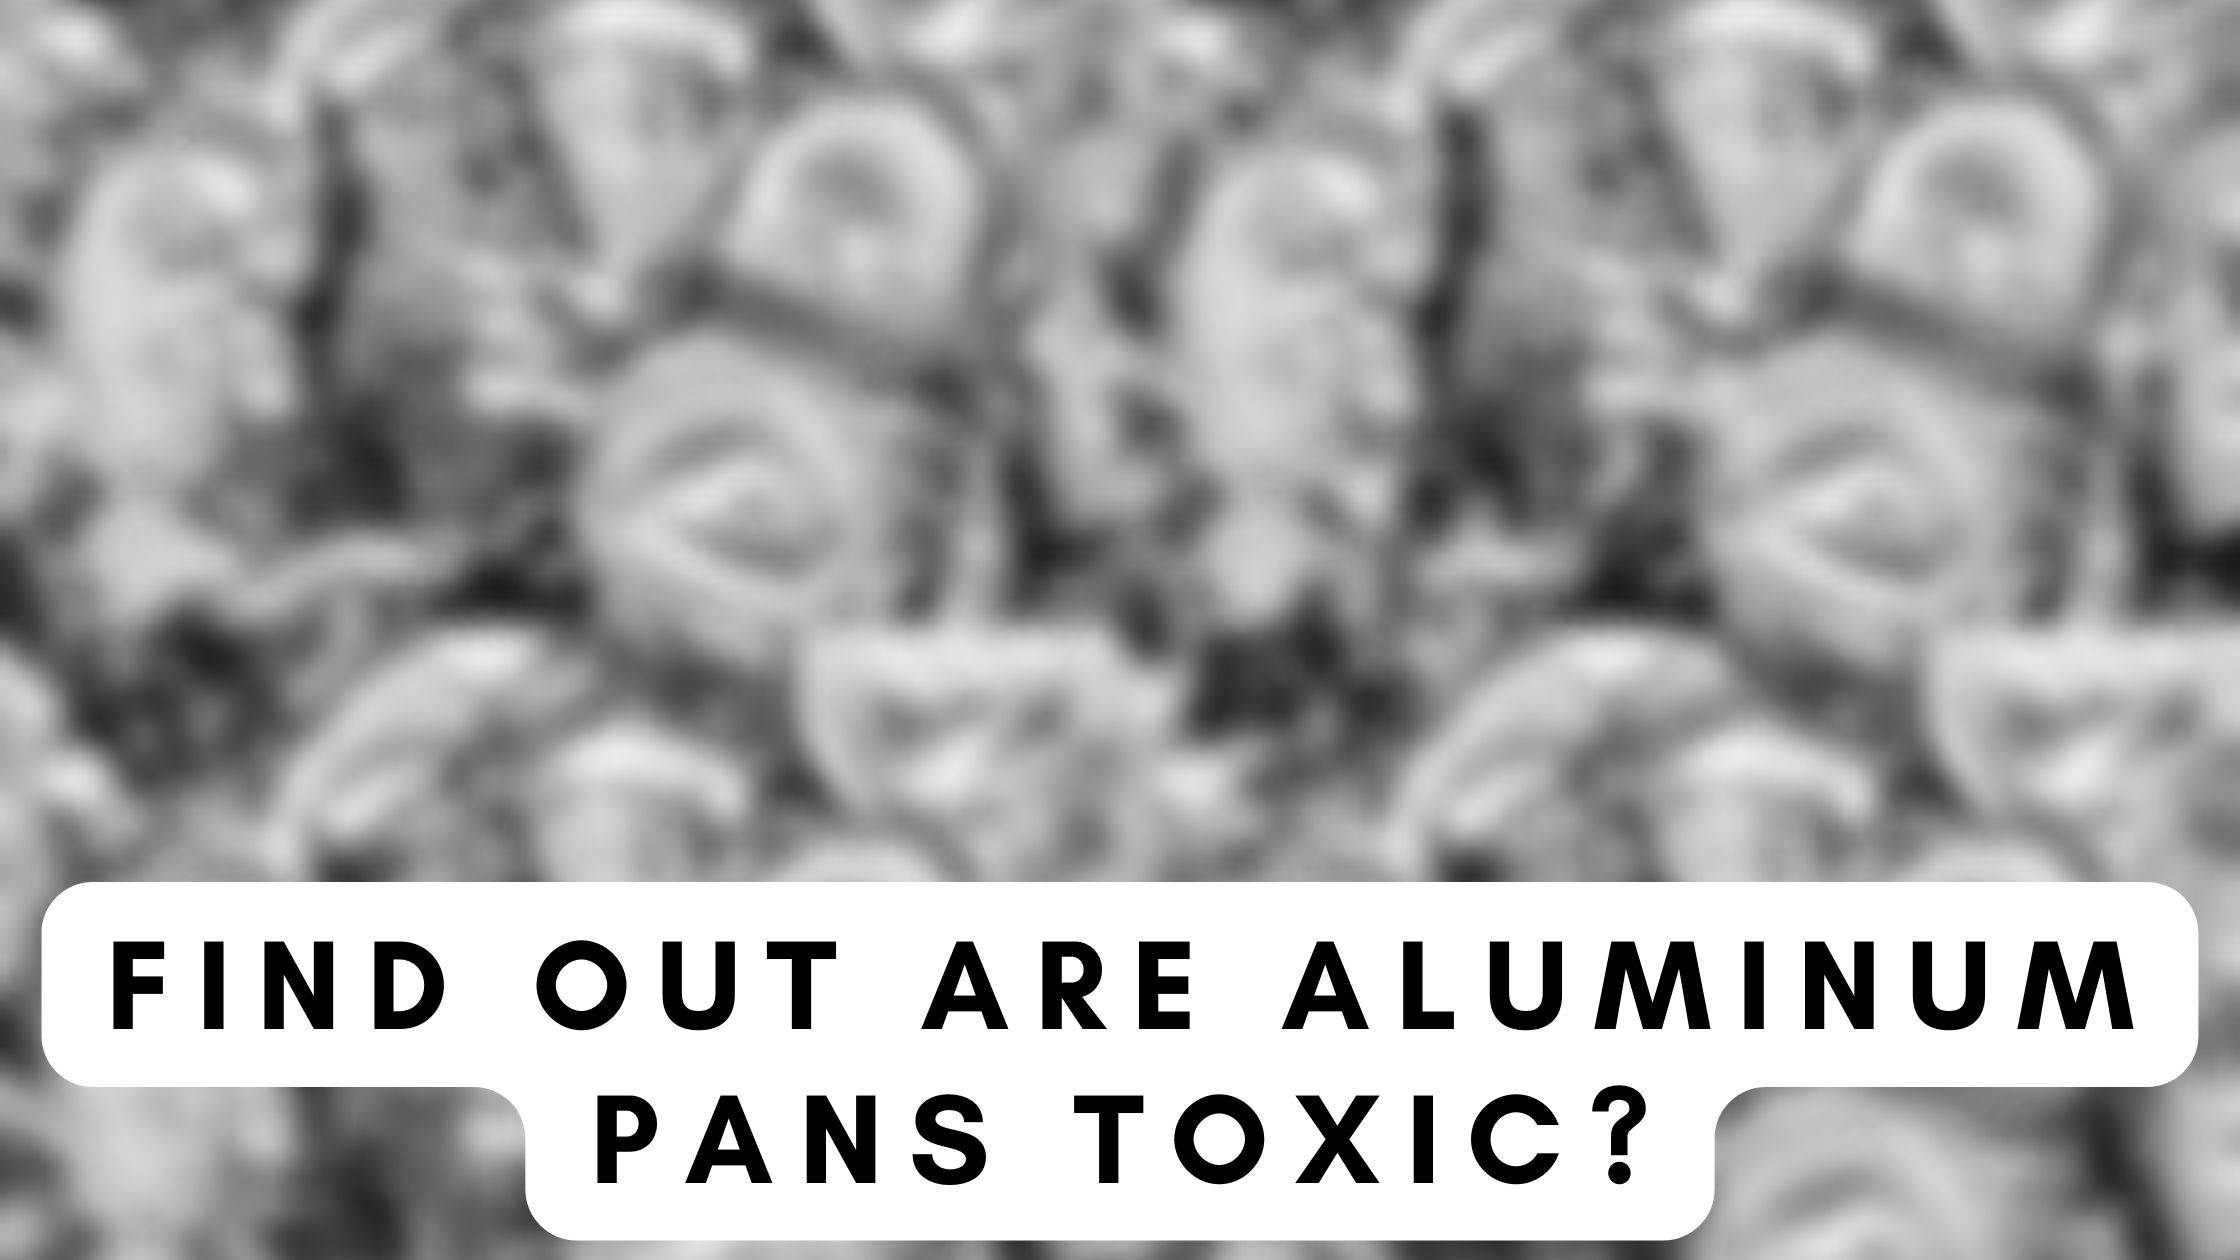 Are Aluminum Pans Toxic